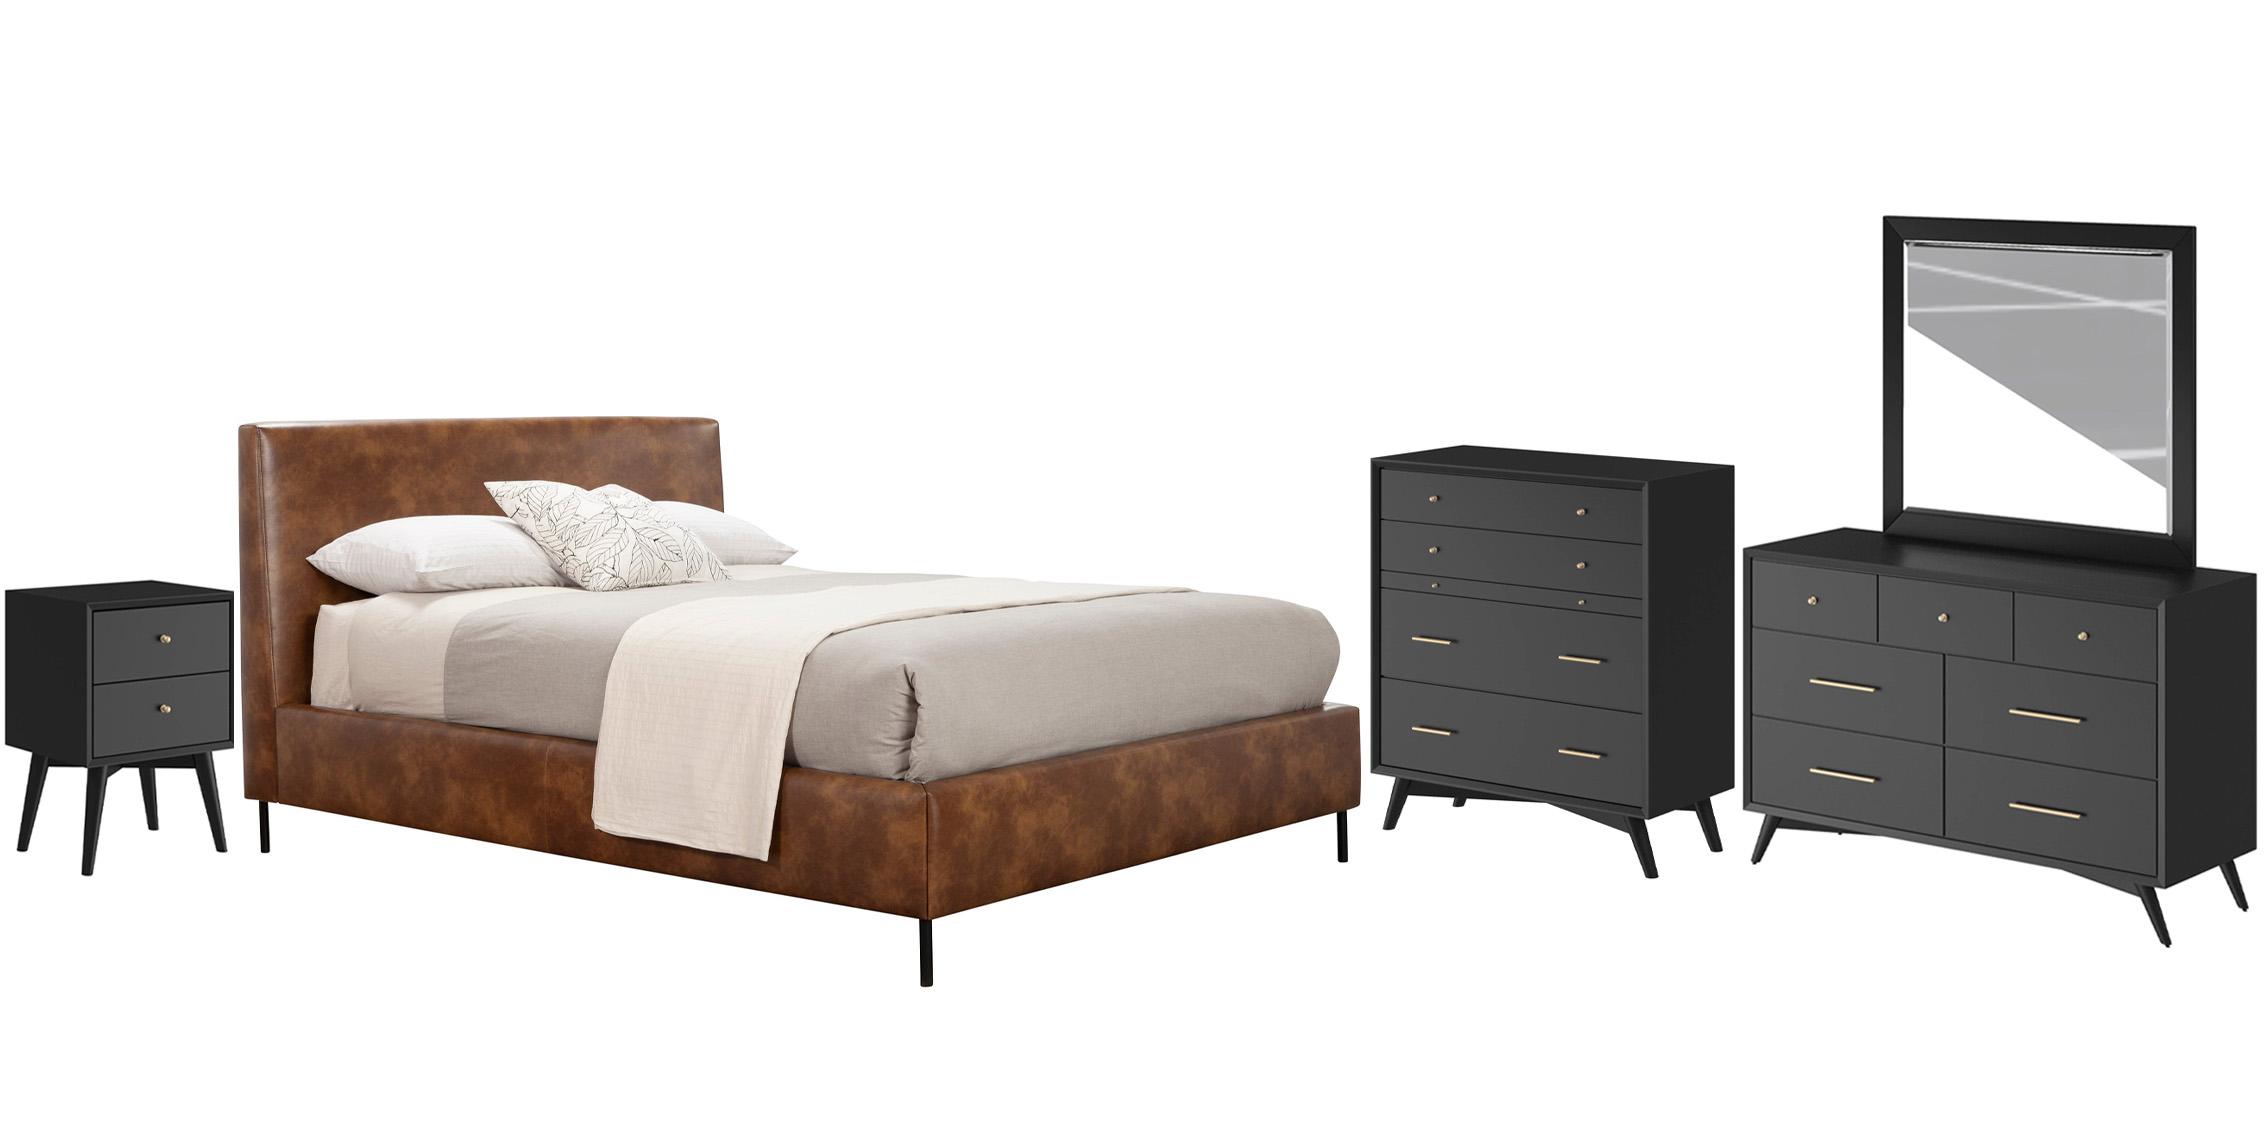 Modern, Rustic Platform Bedroom Set SOPHIA/FLYNN 6902F-BRN-Set-5-BLK in Brown, Black Faux Leather